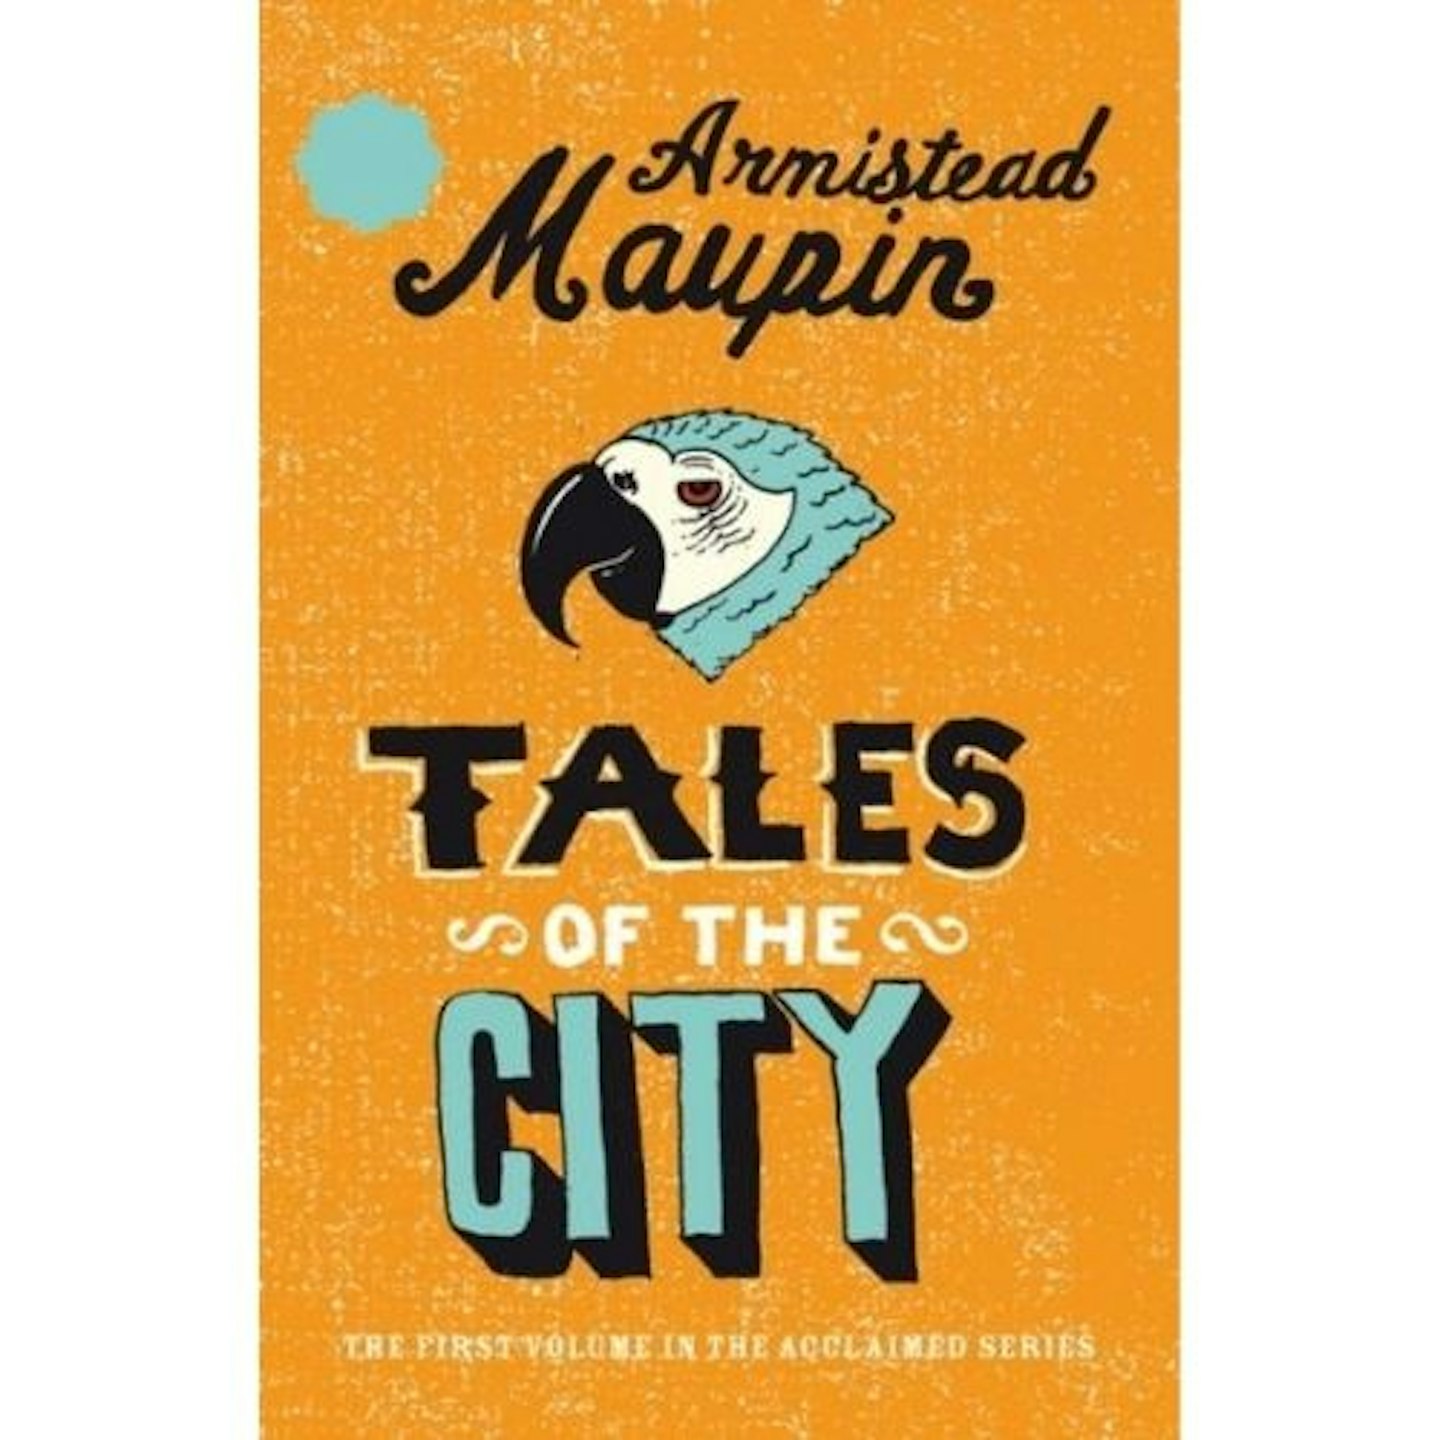 Tales of the City – Armistead Maupin